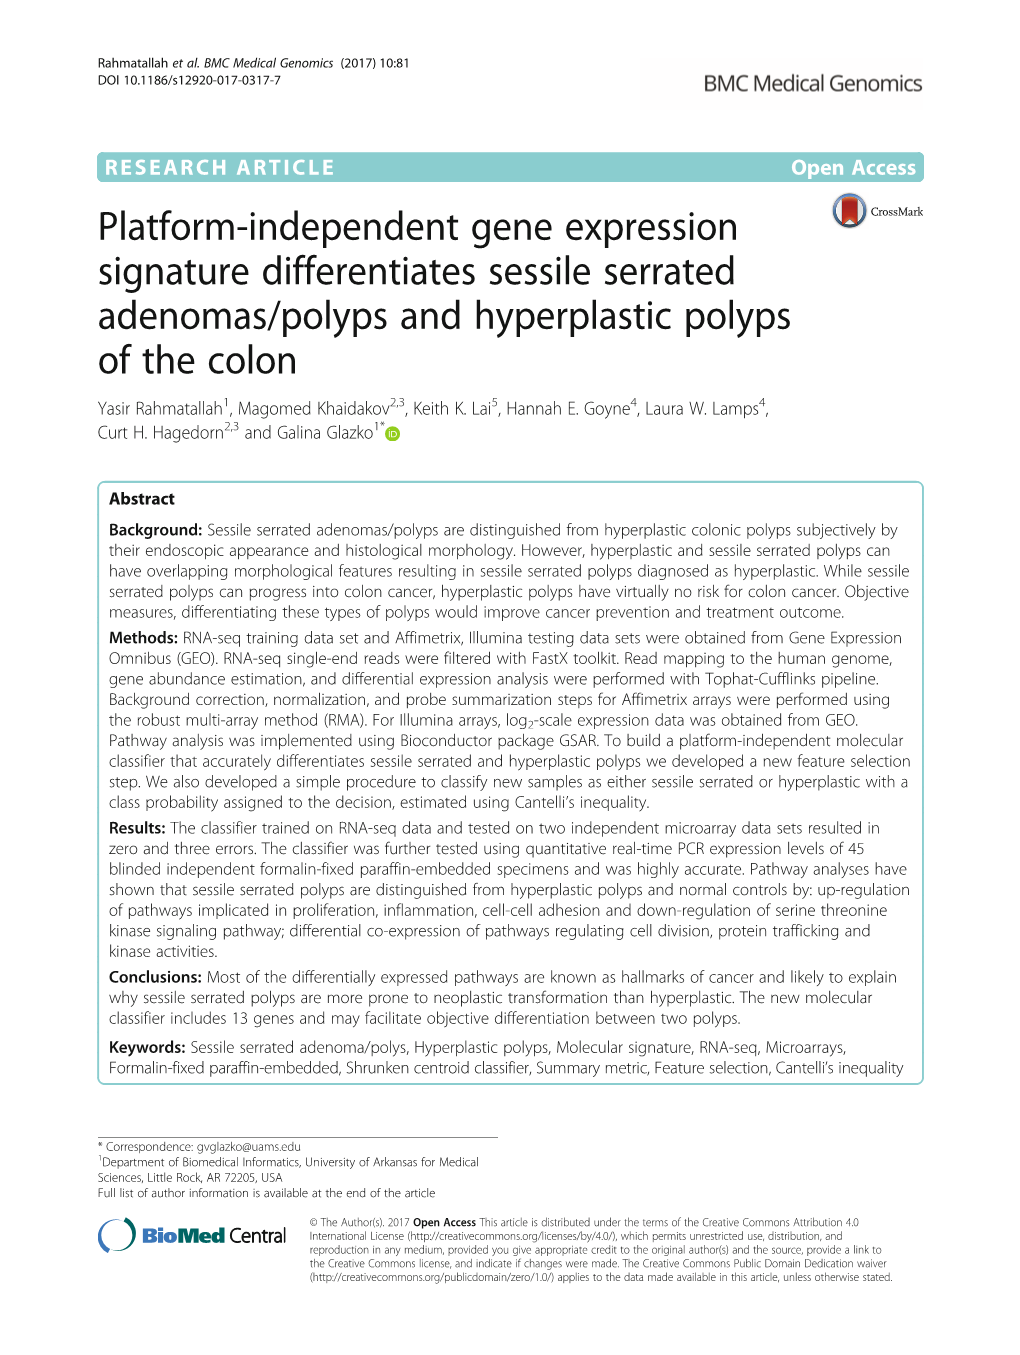 Platform-Independent Gene Expression Signature Differentiates